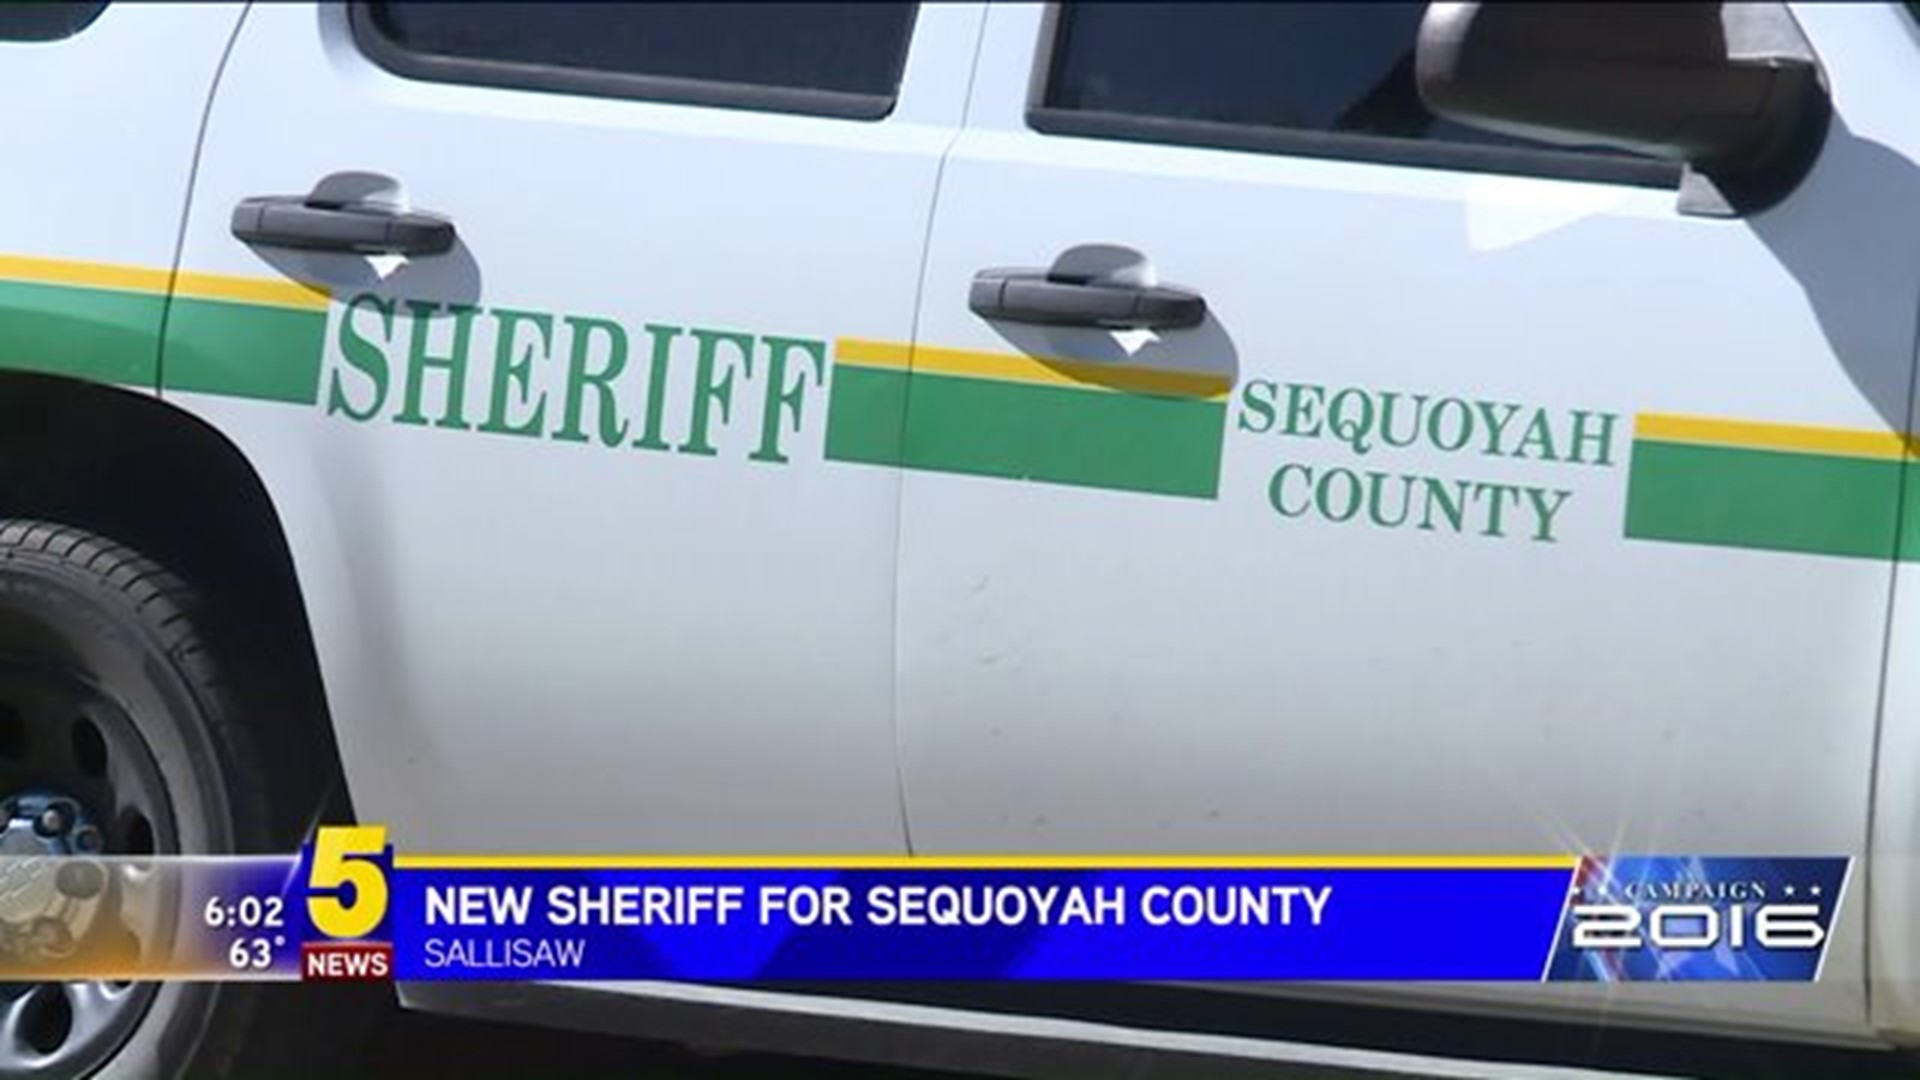 Sequoyah County Sheriff